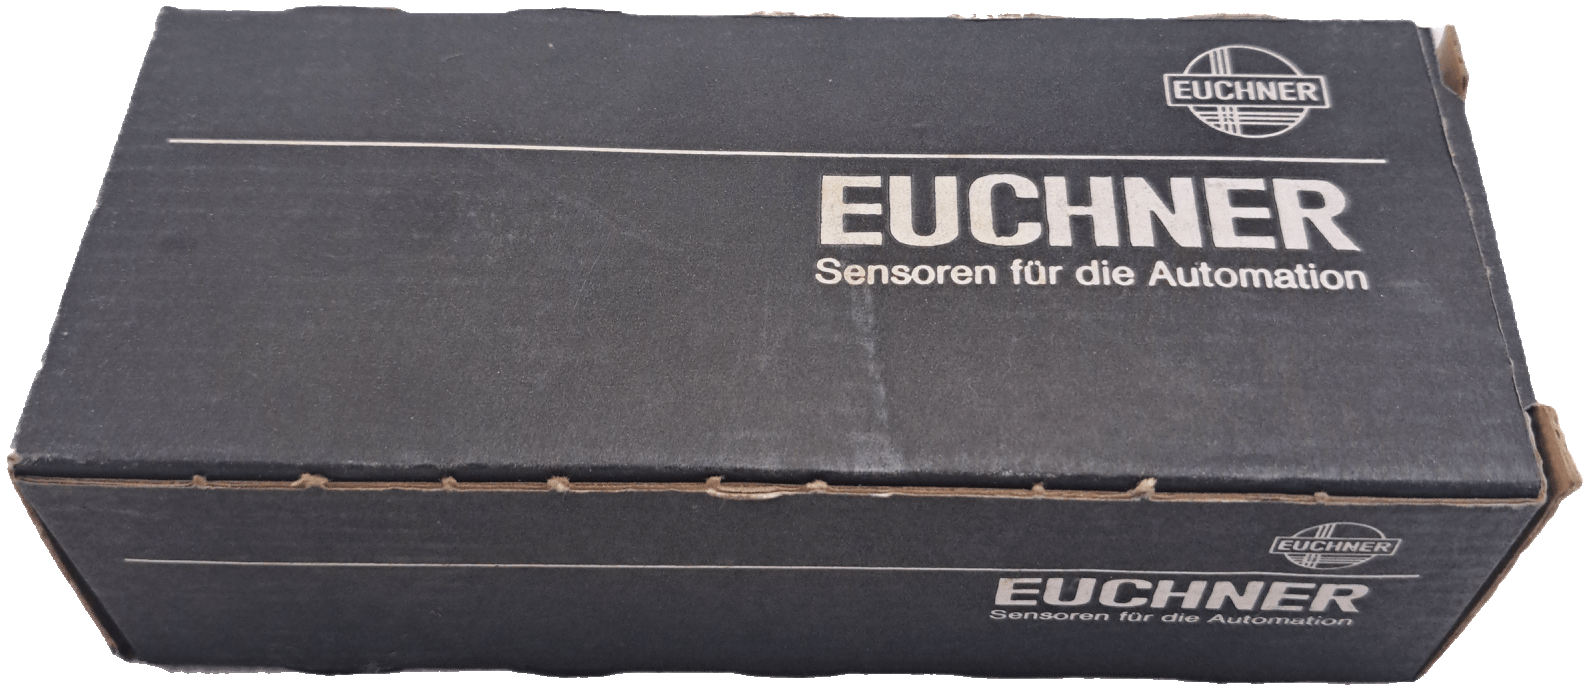 Euchner Sicherheitsschalter NZ2VZ-518 A L060 - #product_category# | Klenk Maschinenhandel